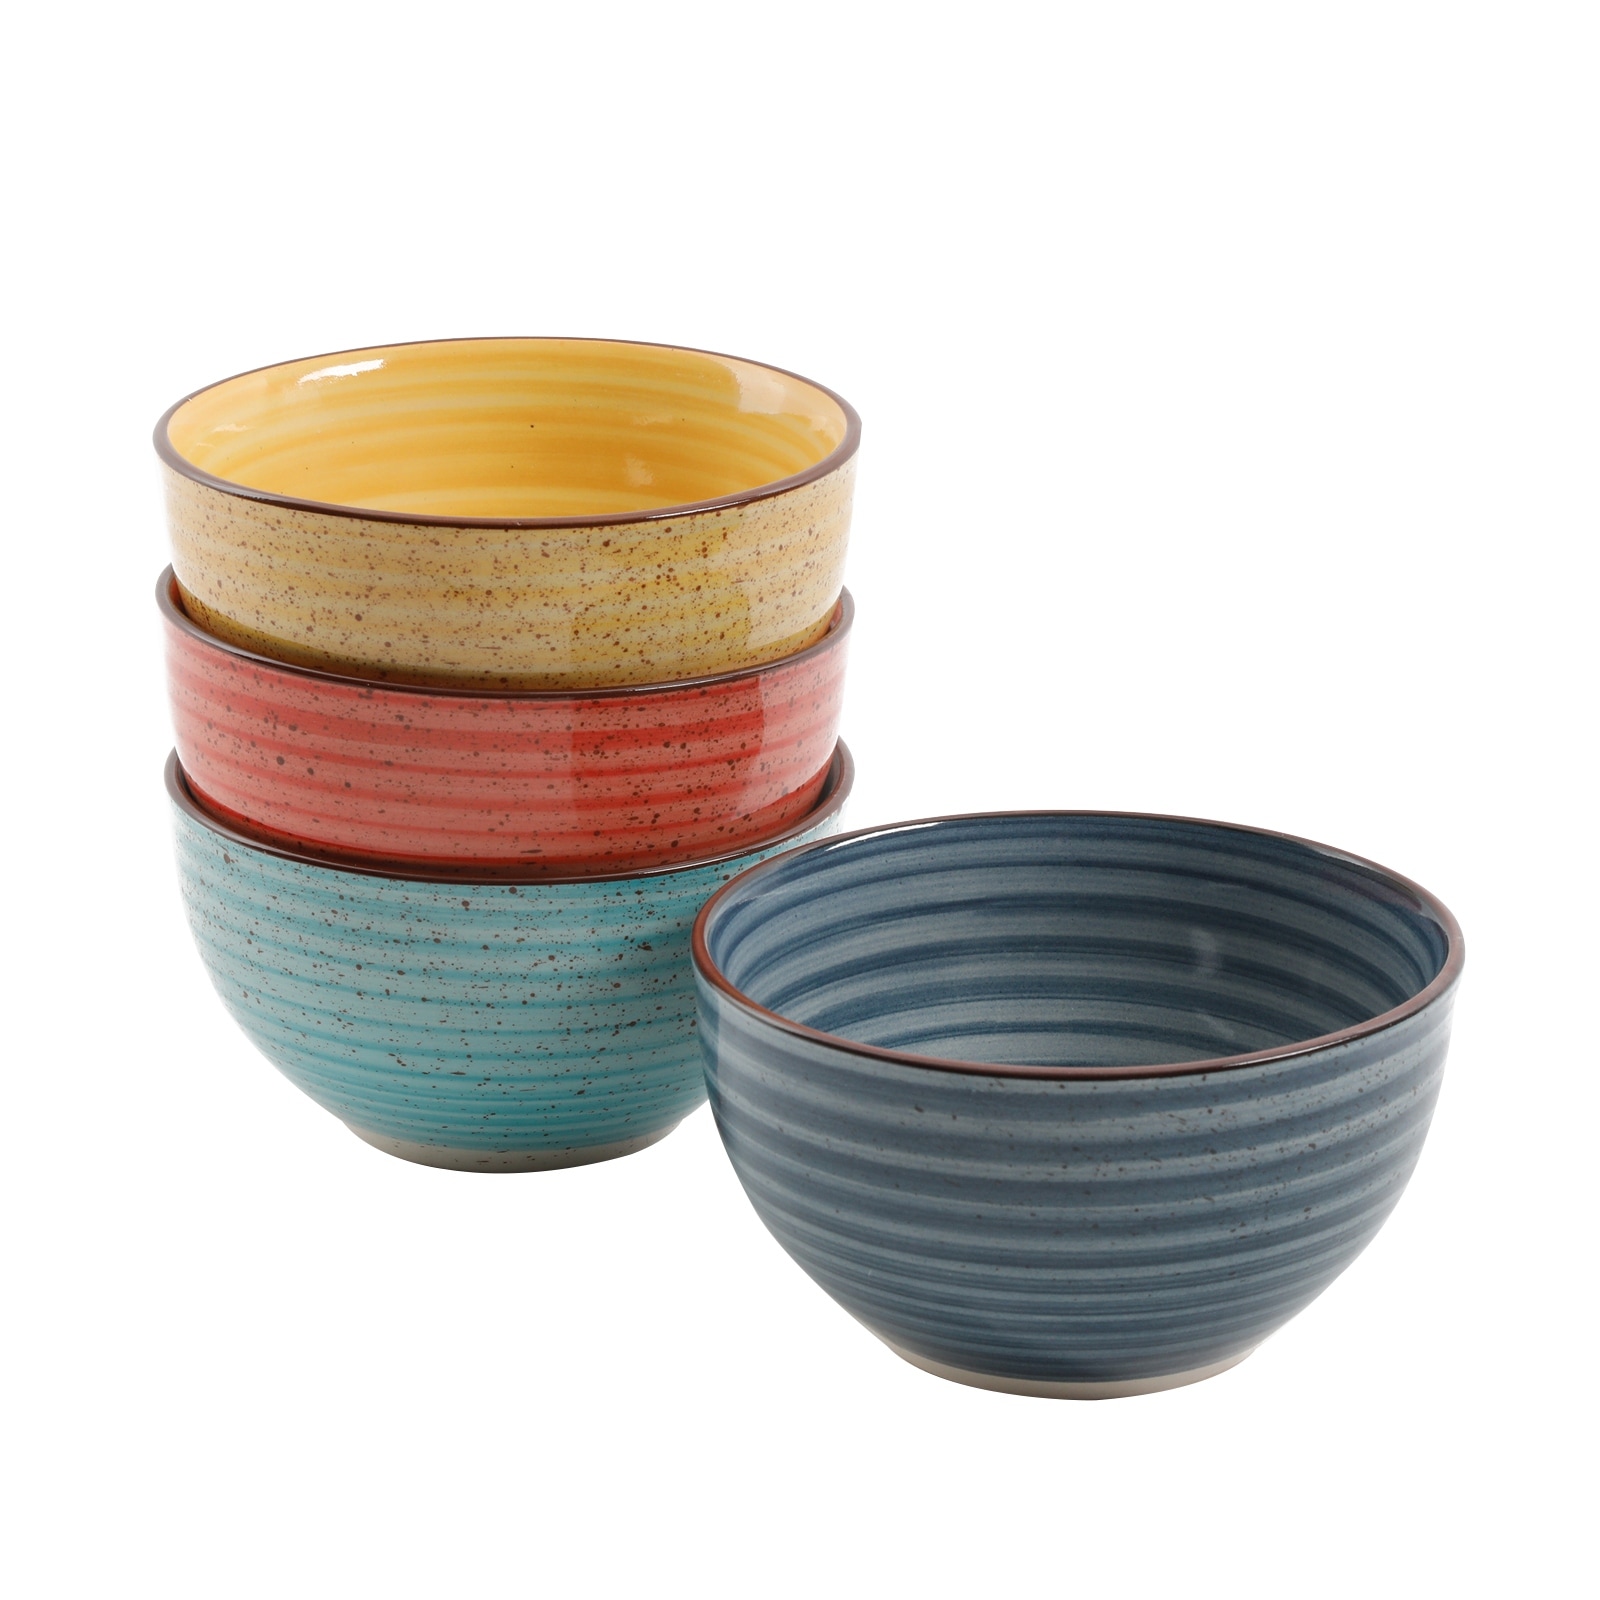 KitchenAid 5 Quart Speckled Stone Ceramic Bowl